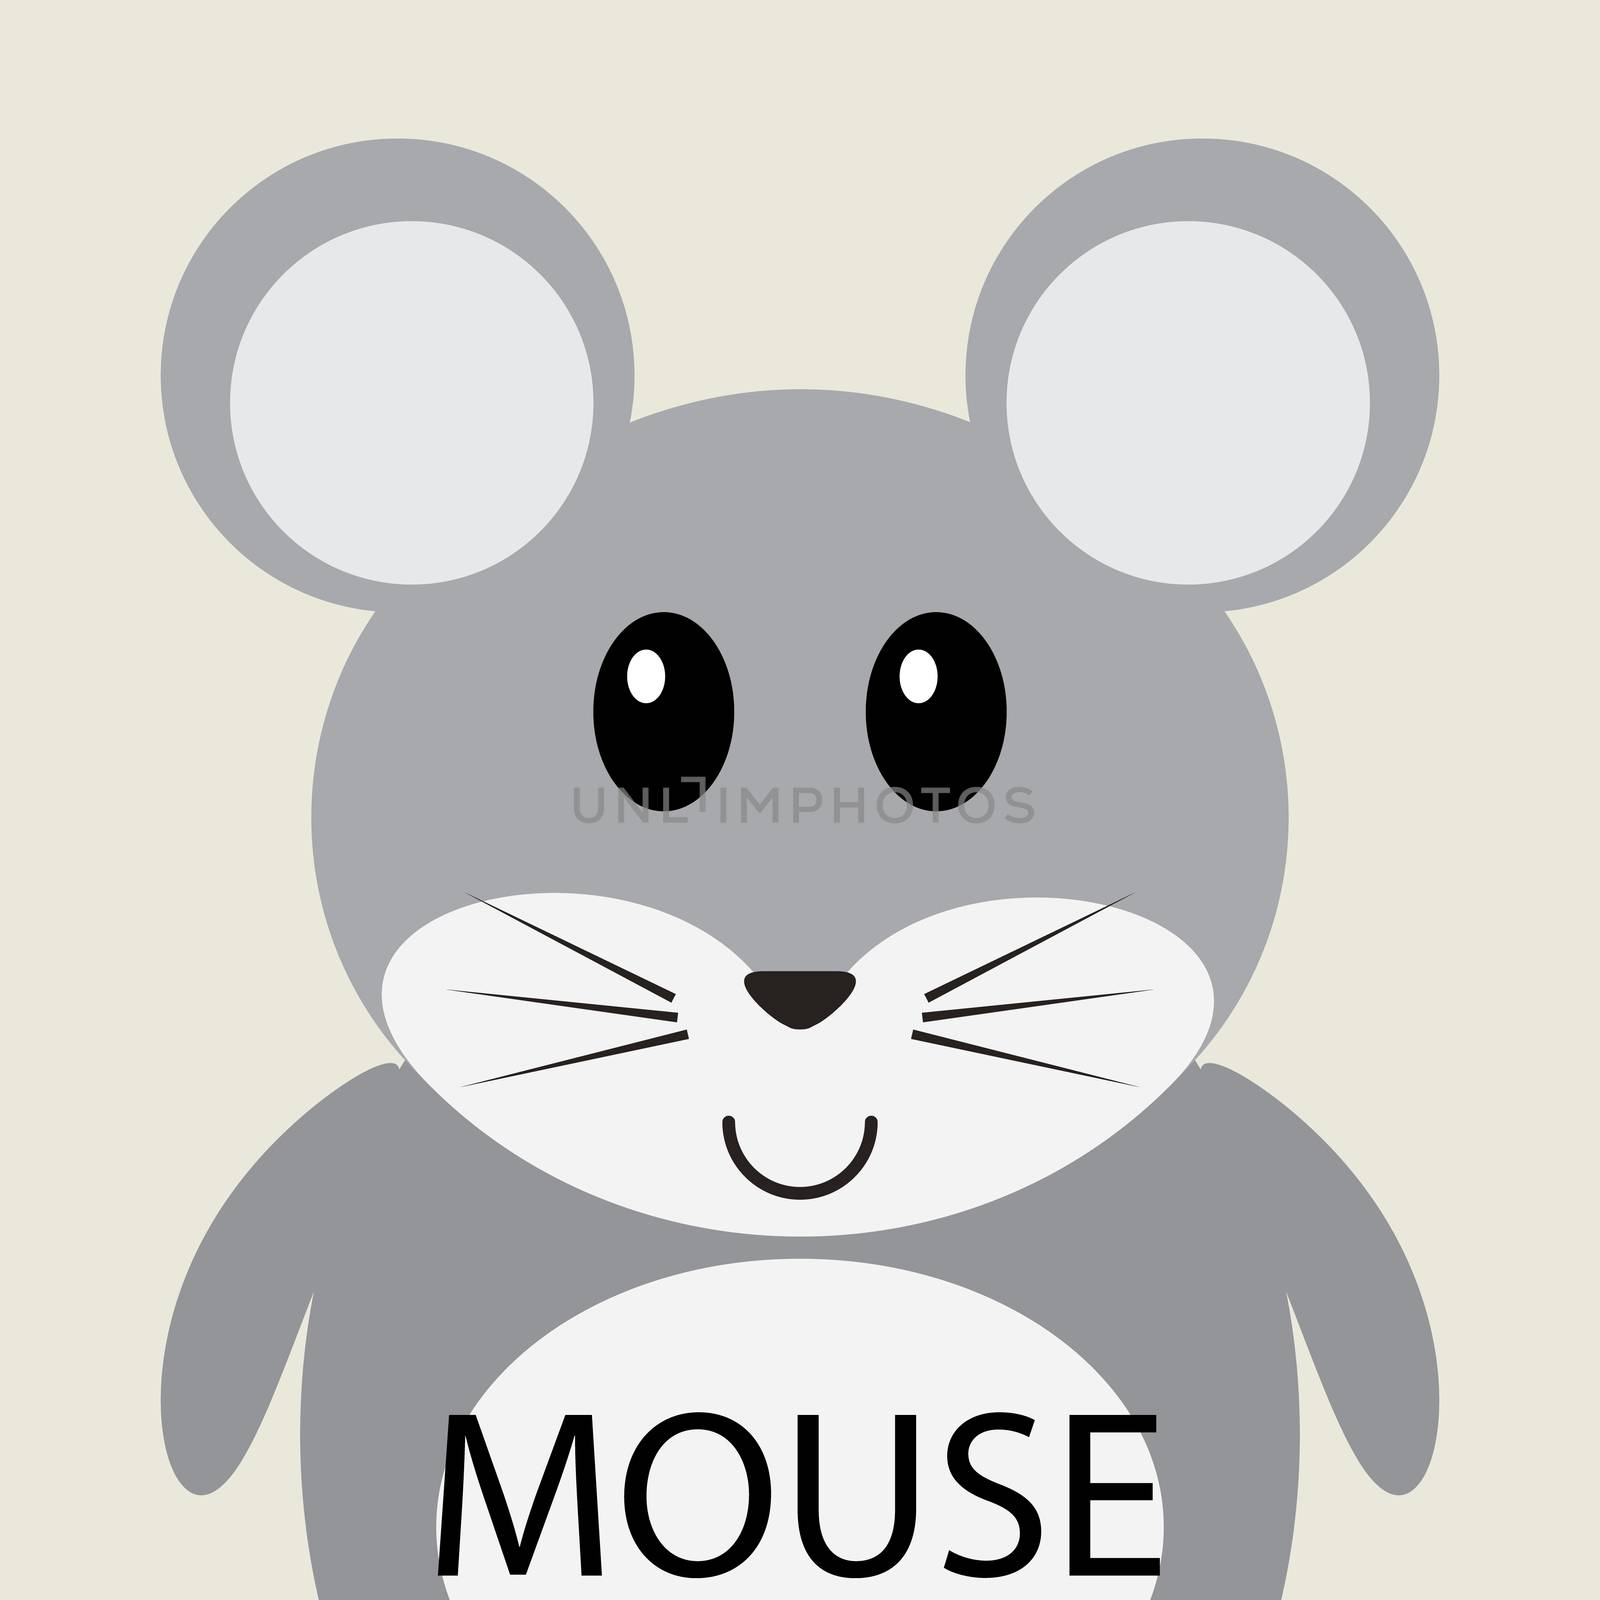 Cute grey mouse cartoon flat icon avatar by Lemon_workshop